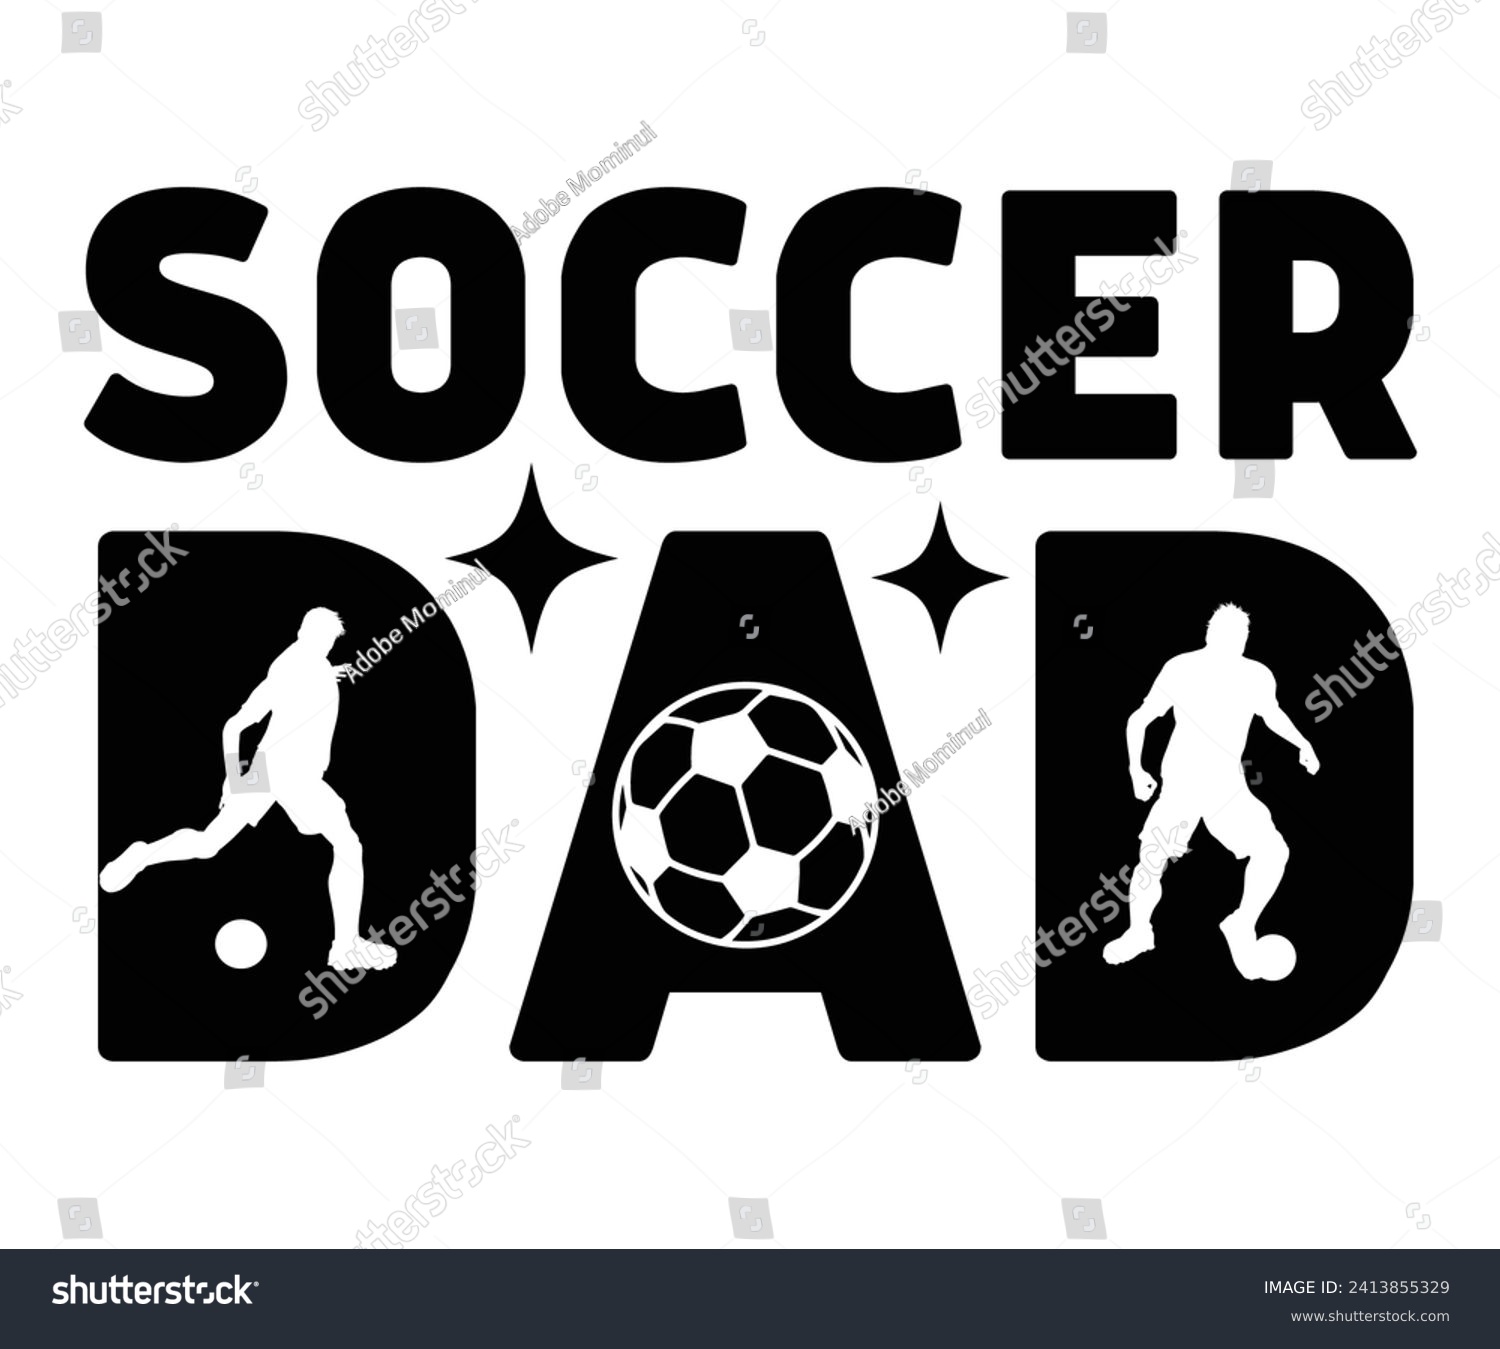 SVG of Soccer Dad Svg,Soccer Quote Svg,Retro,Soccer Mom Shirt,Funny Shirt,Soccar Player Shirt,Game Day Shirt,Gift For Soccer,Dad of Soccer,Soccer Mascot,Soccer Football,Sport Design Svg,Groovy Cut File, svg